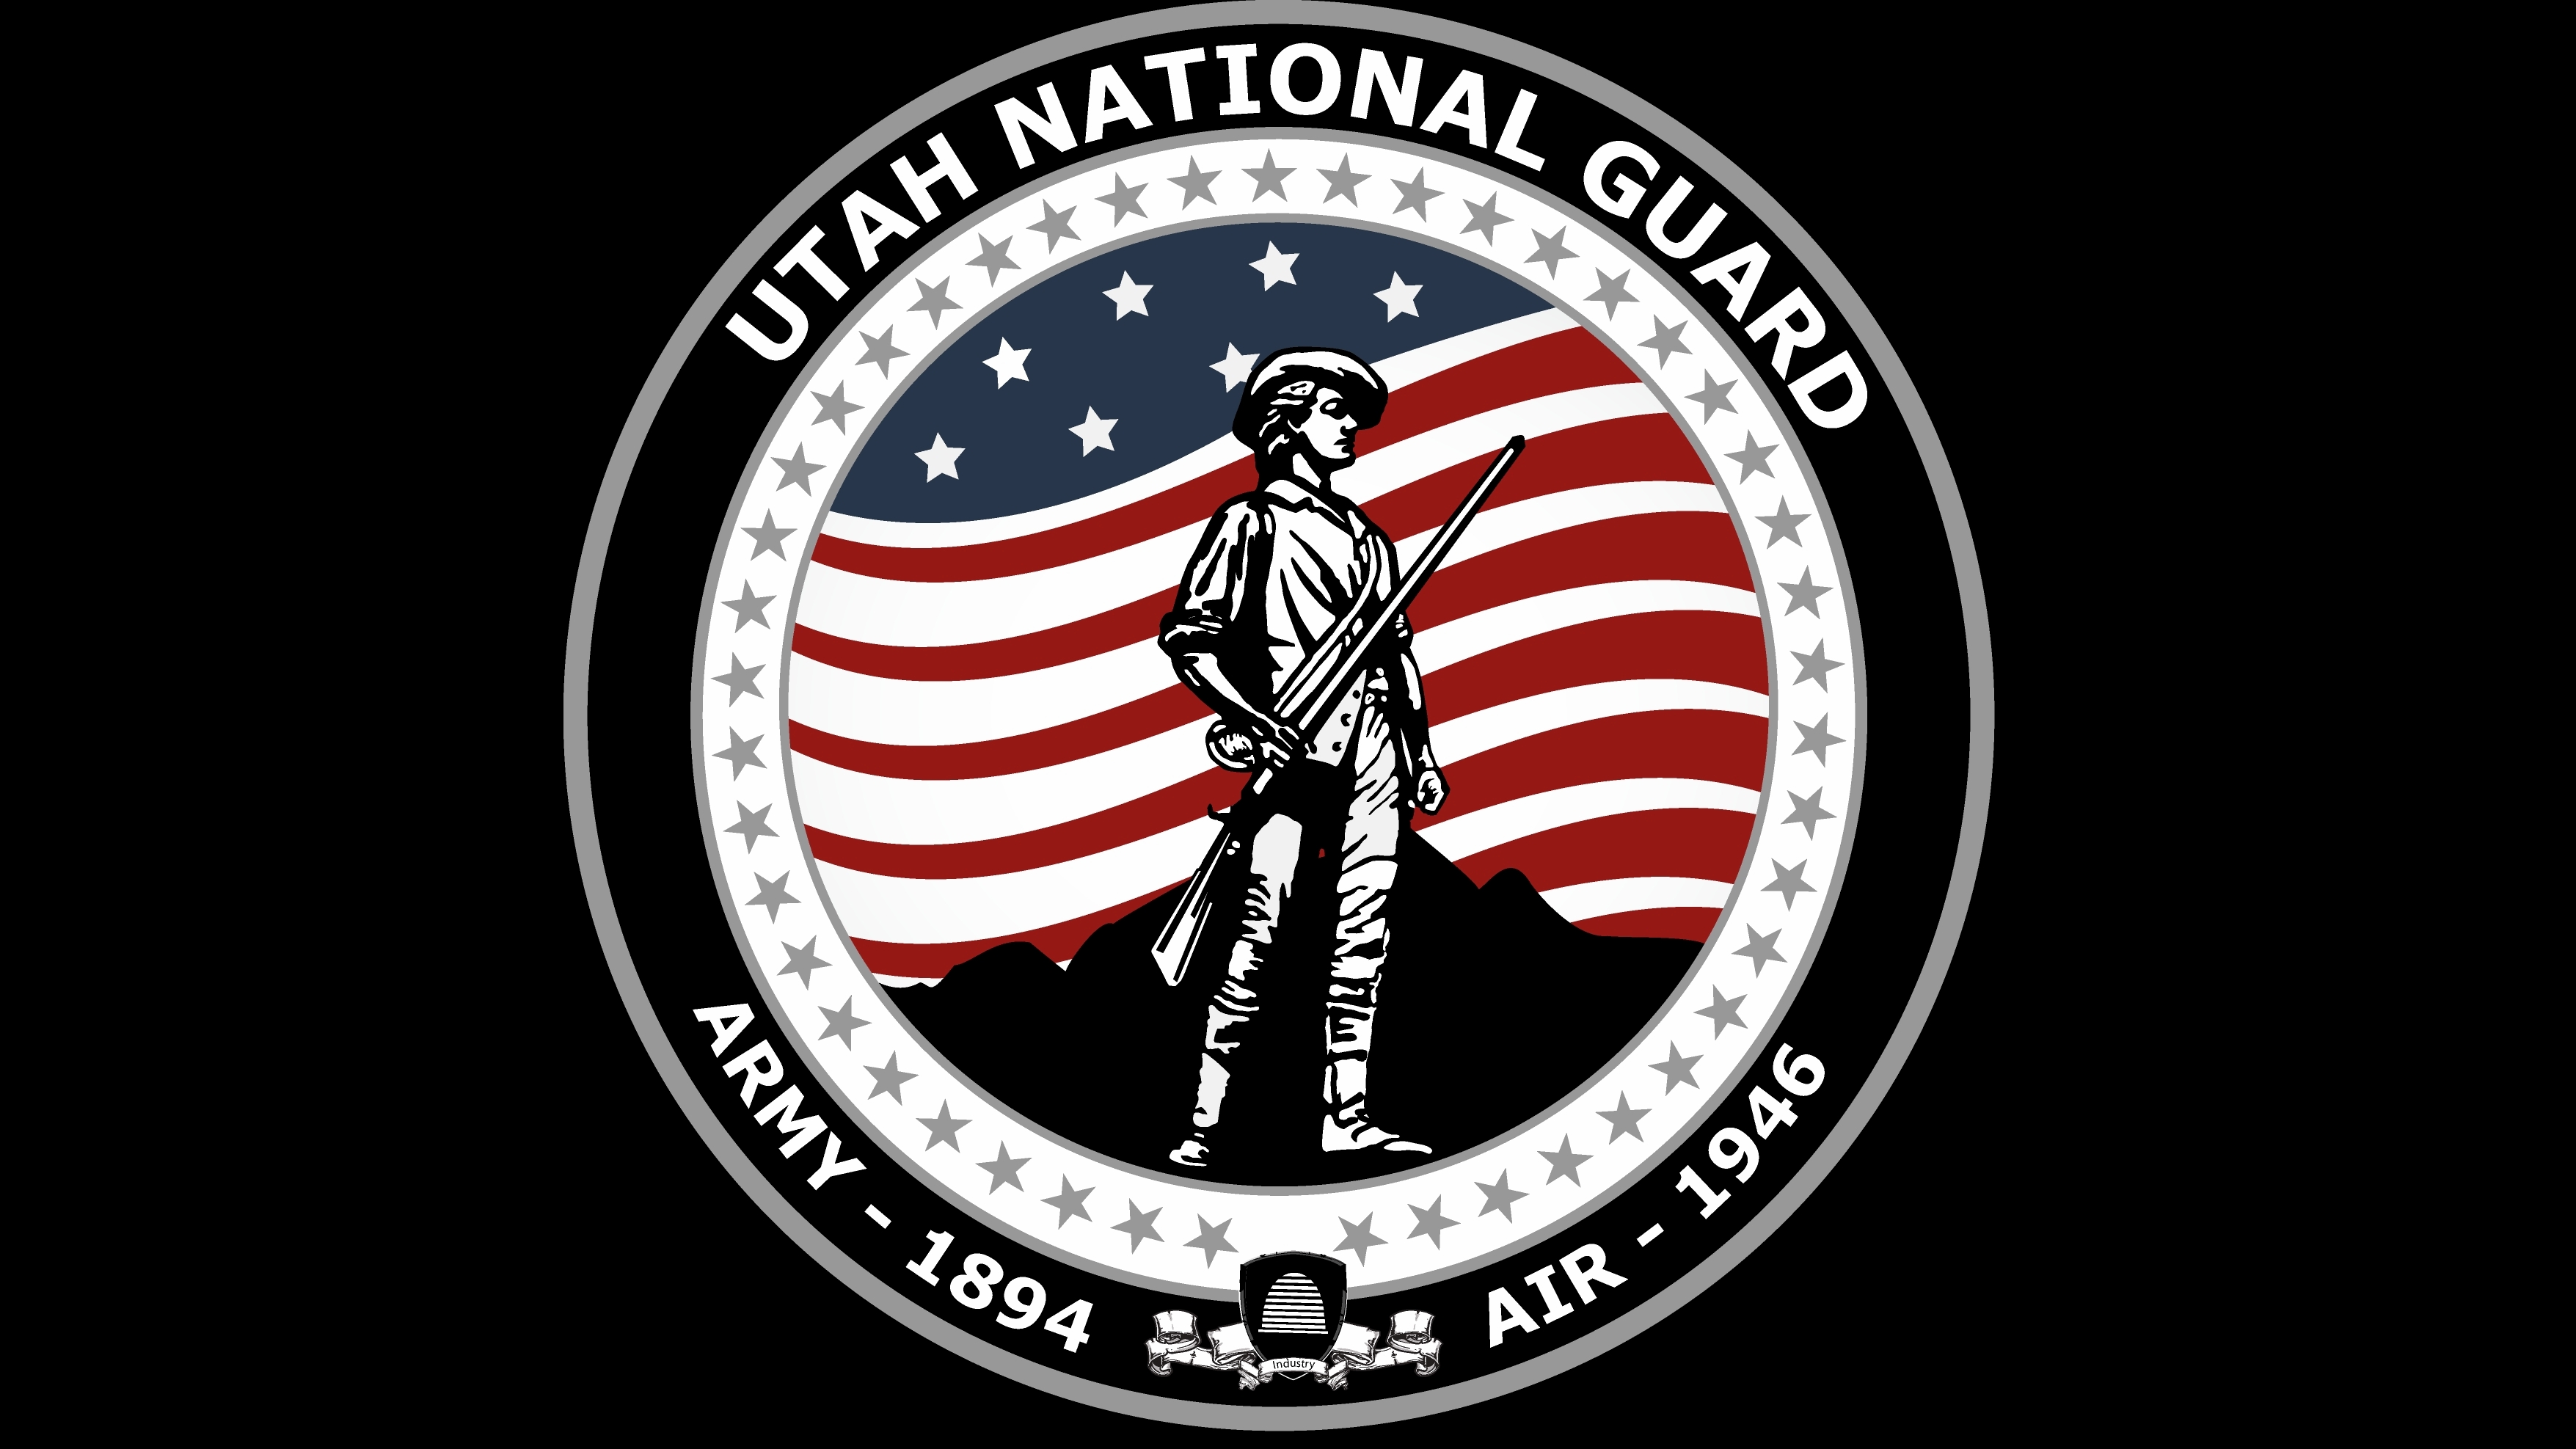 Free download National Guard Computer Wallpapers Desktop Backgrounds